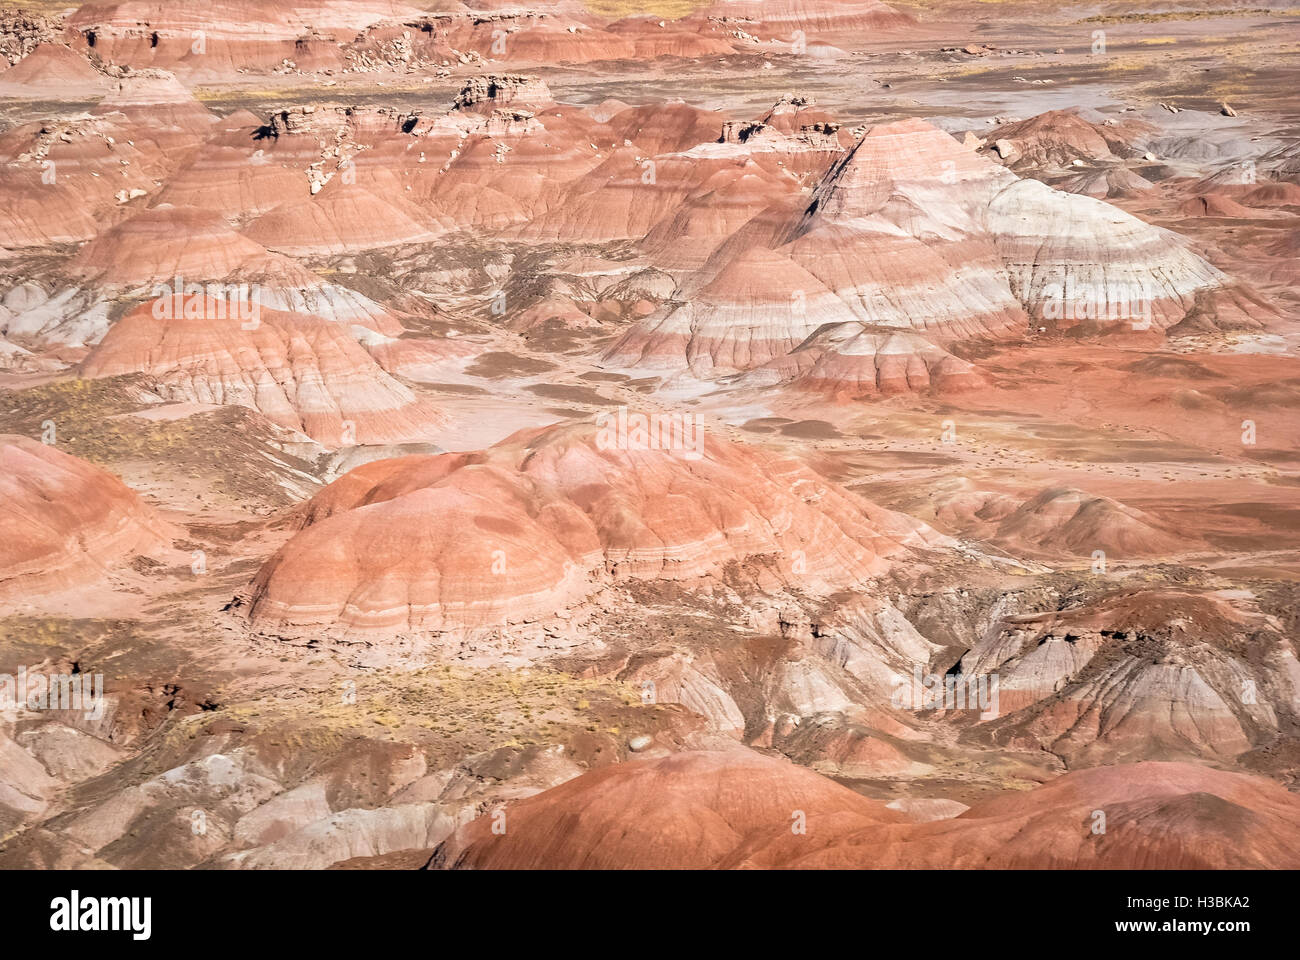 Painted desert badlands terrain in northern Arizona. Stock Photo